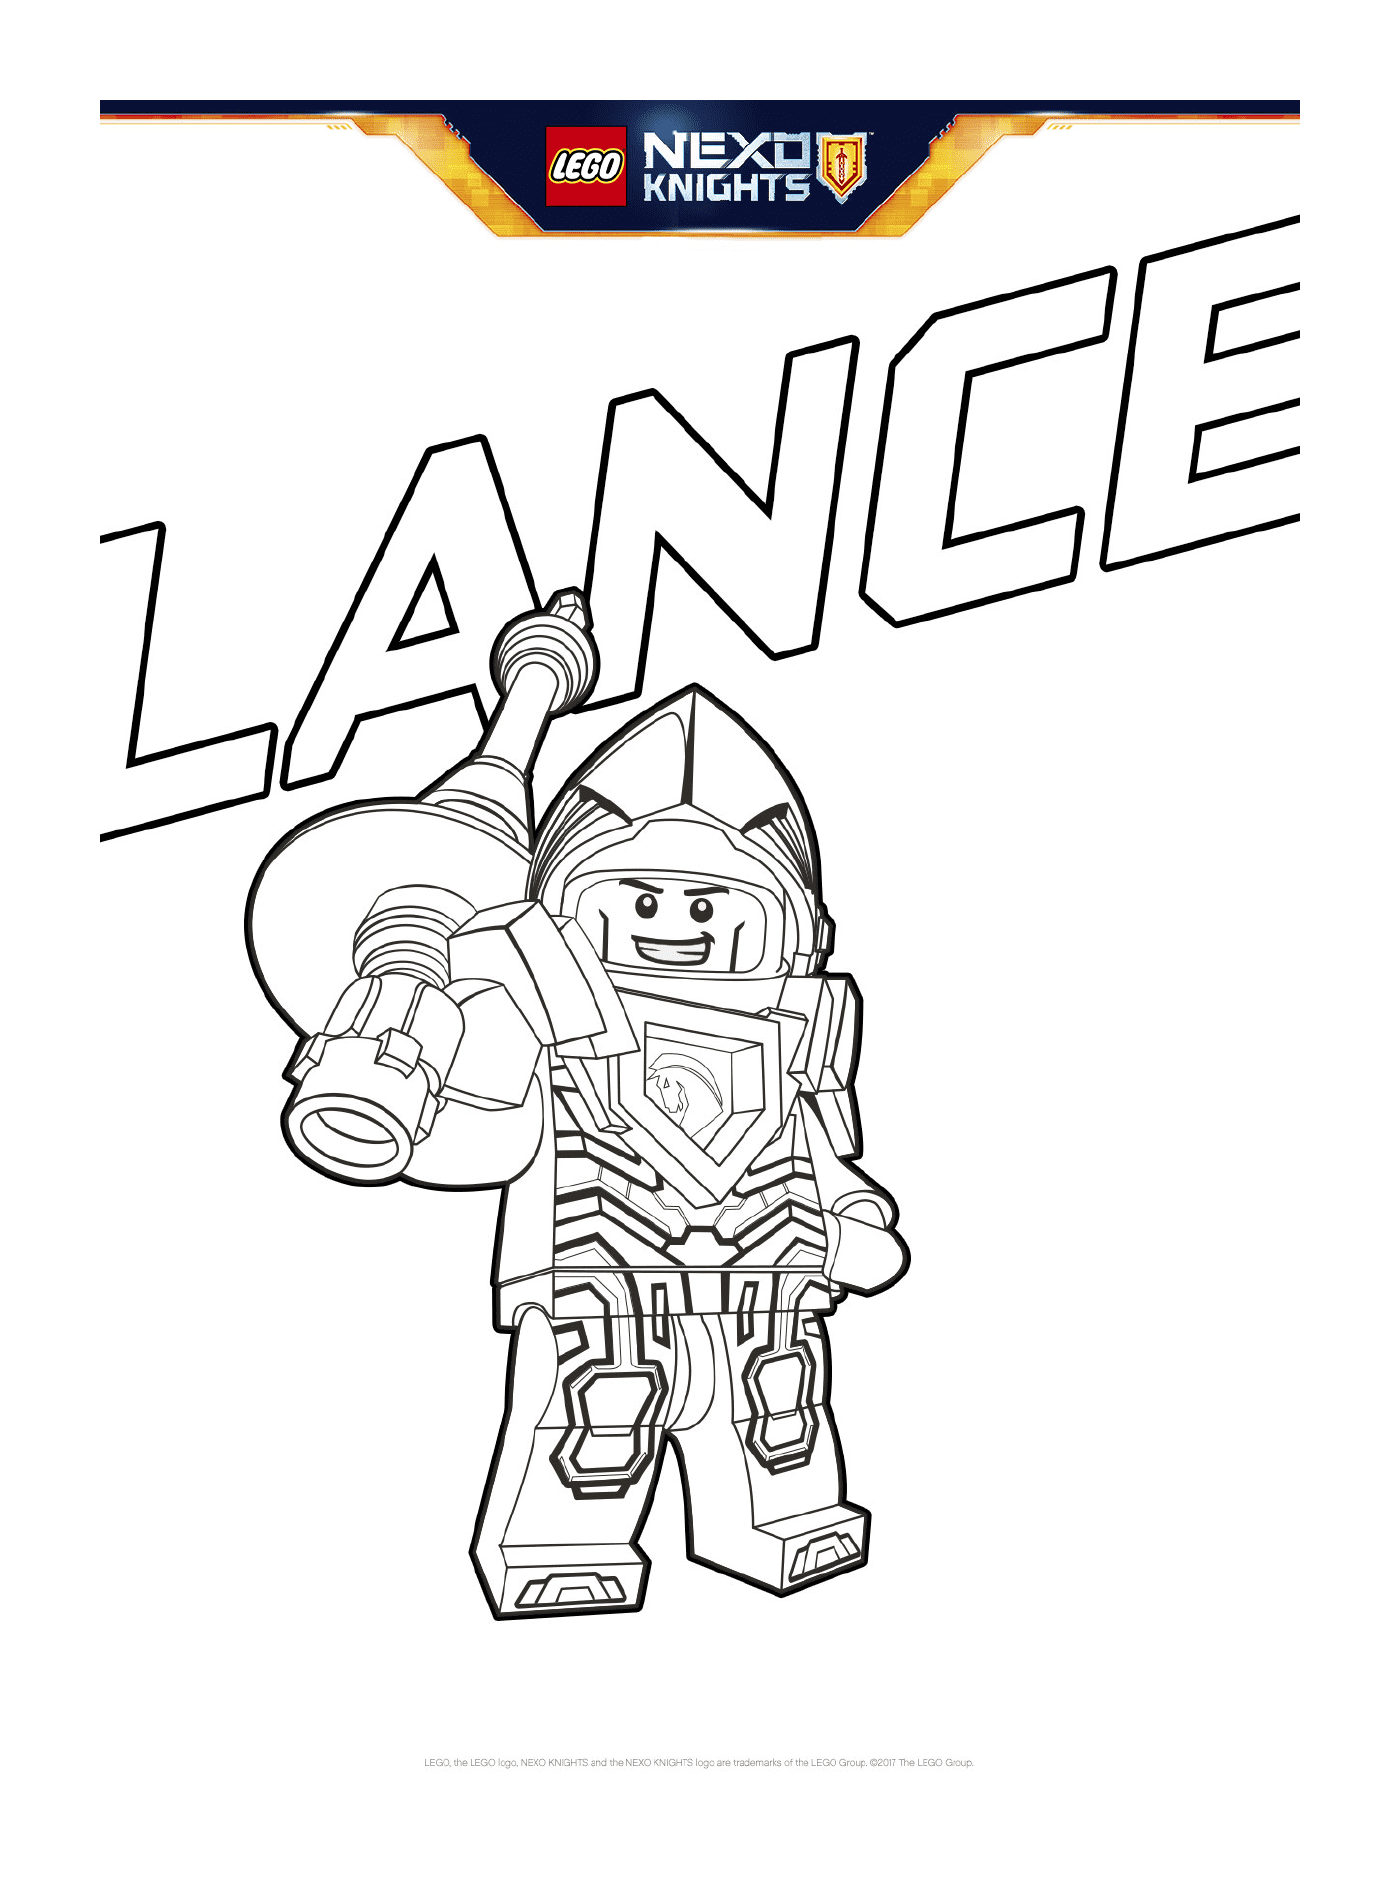   Lance Nexo Knights LEGO 